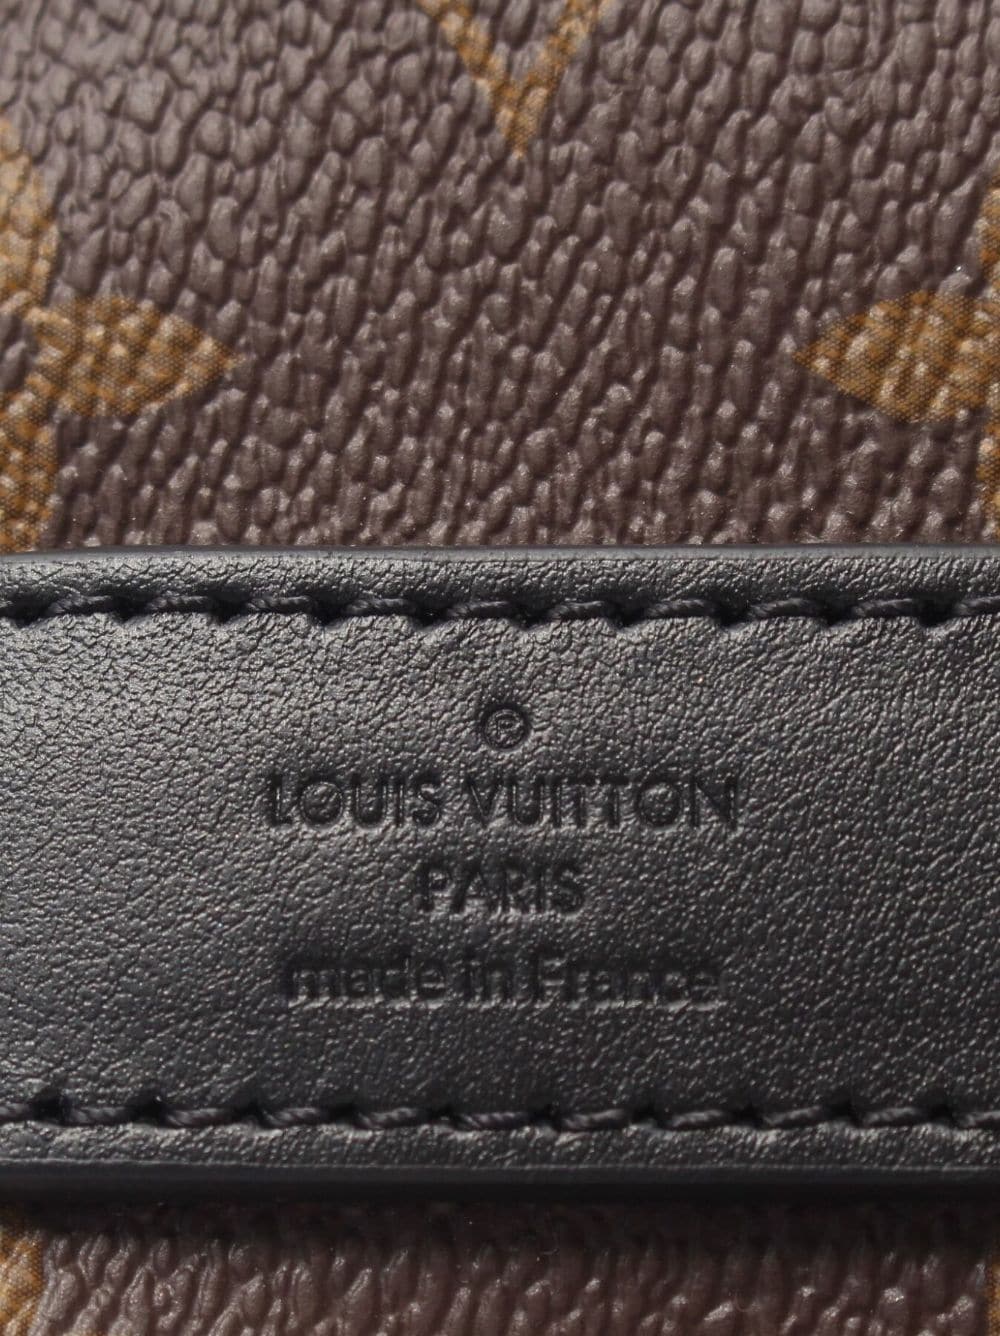 Louis Vuitton Keepall Bandouliere 25 Monogram Embossed Orange in Cowhide  Leather - US